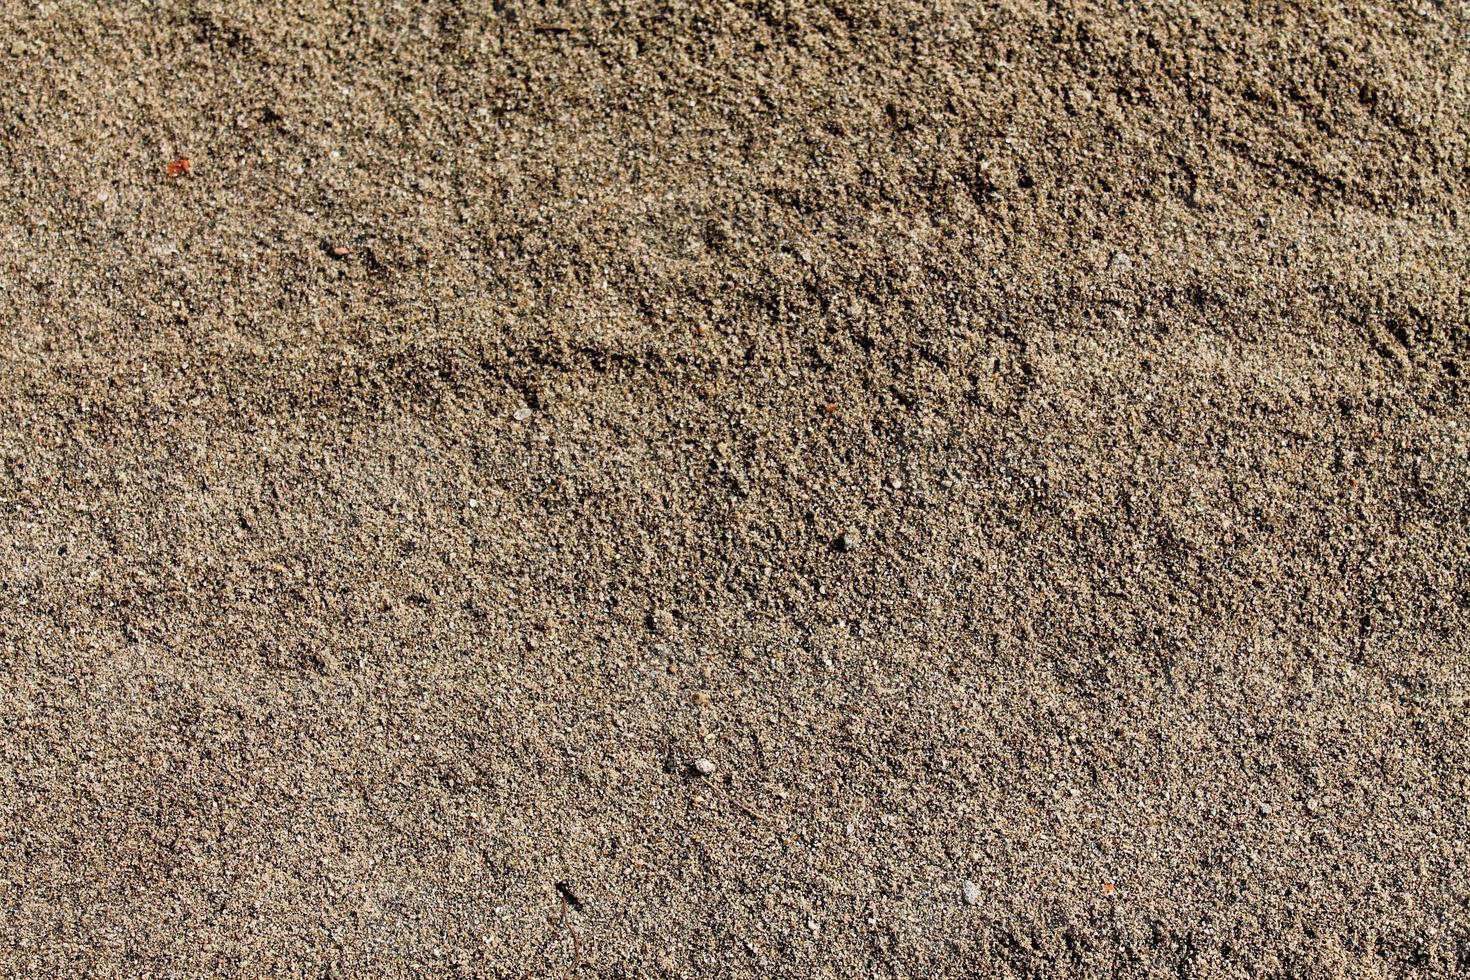 Brown Sand Texture photo